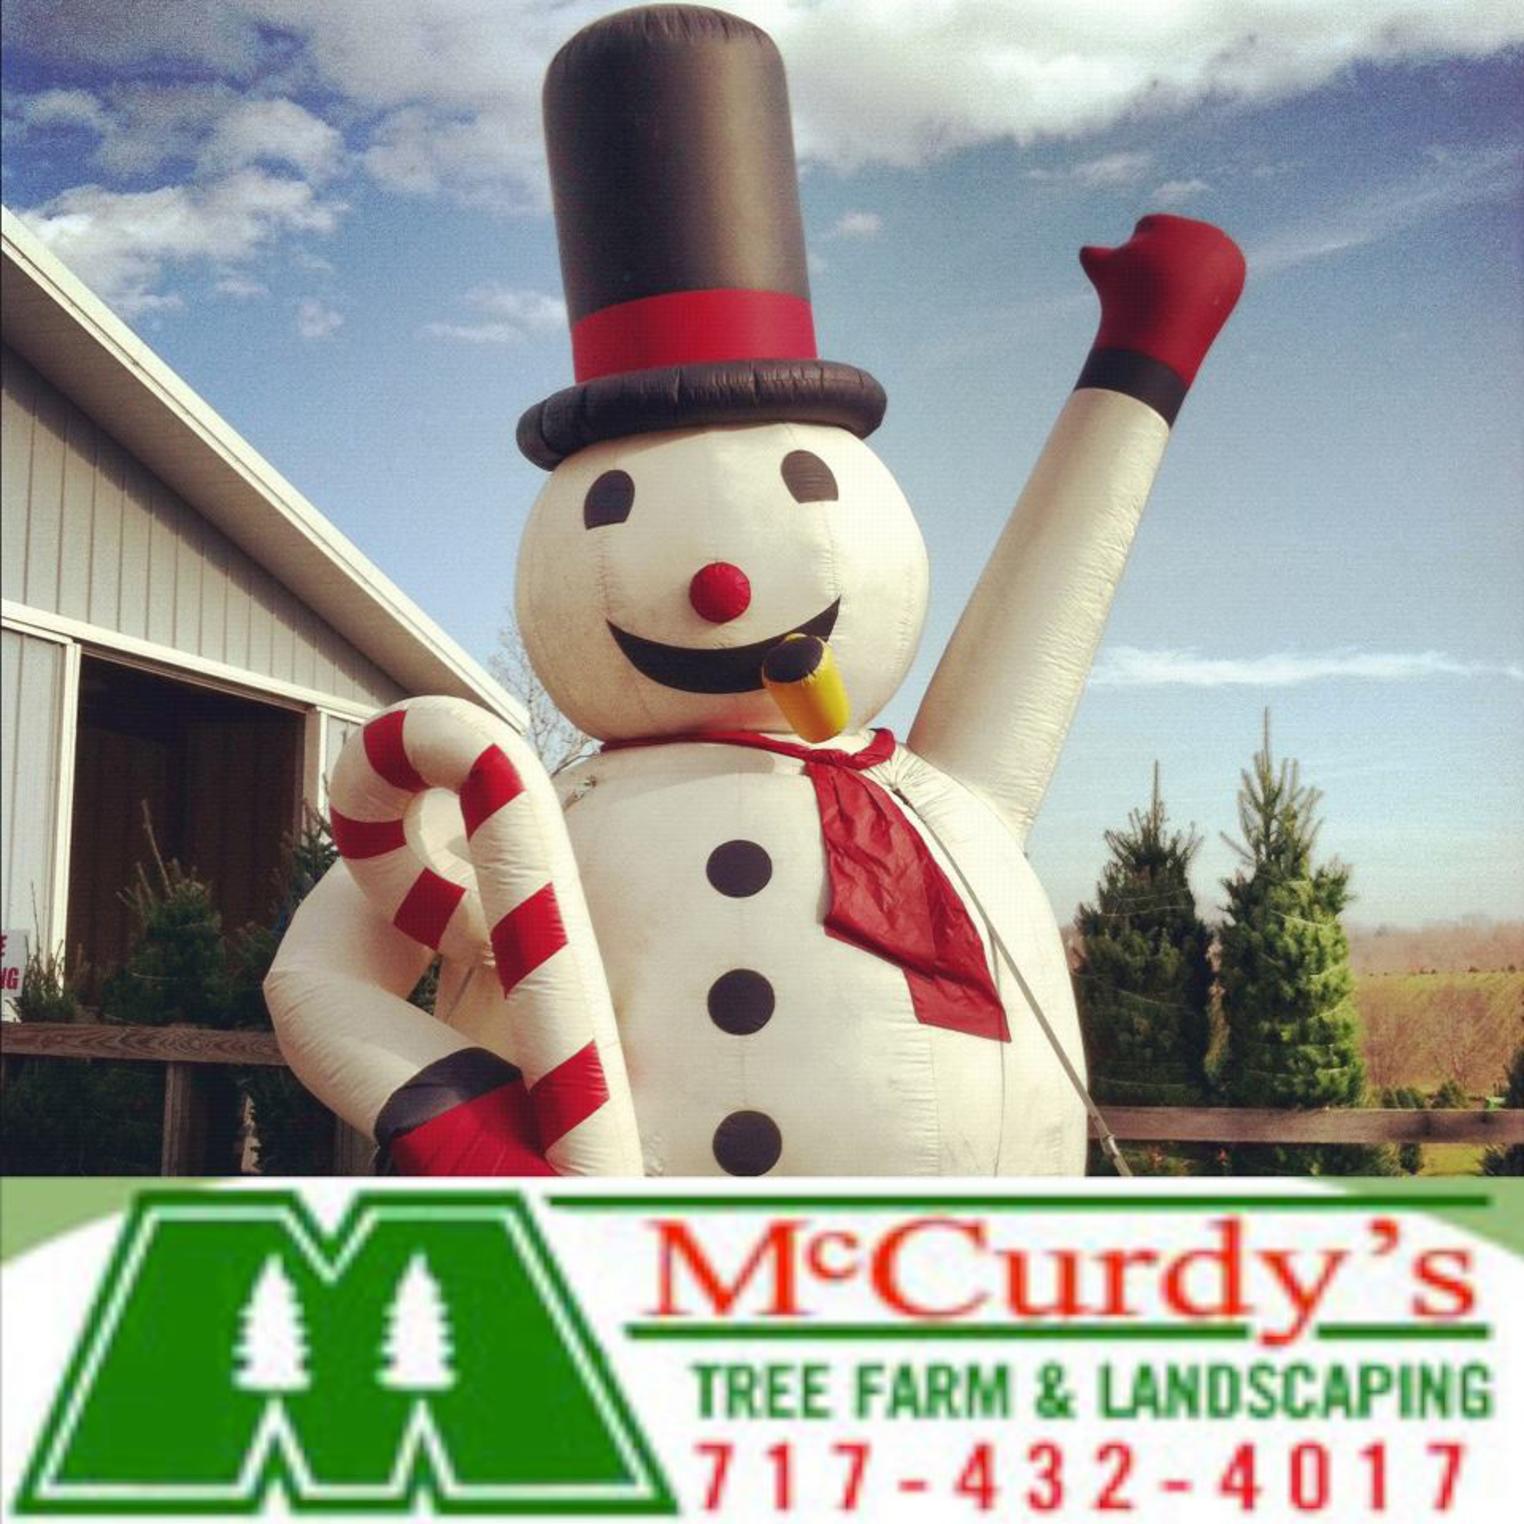 McCurdy's Tree Farm & Landscaping